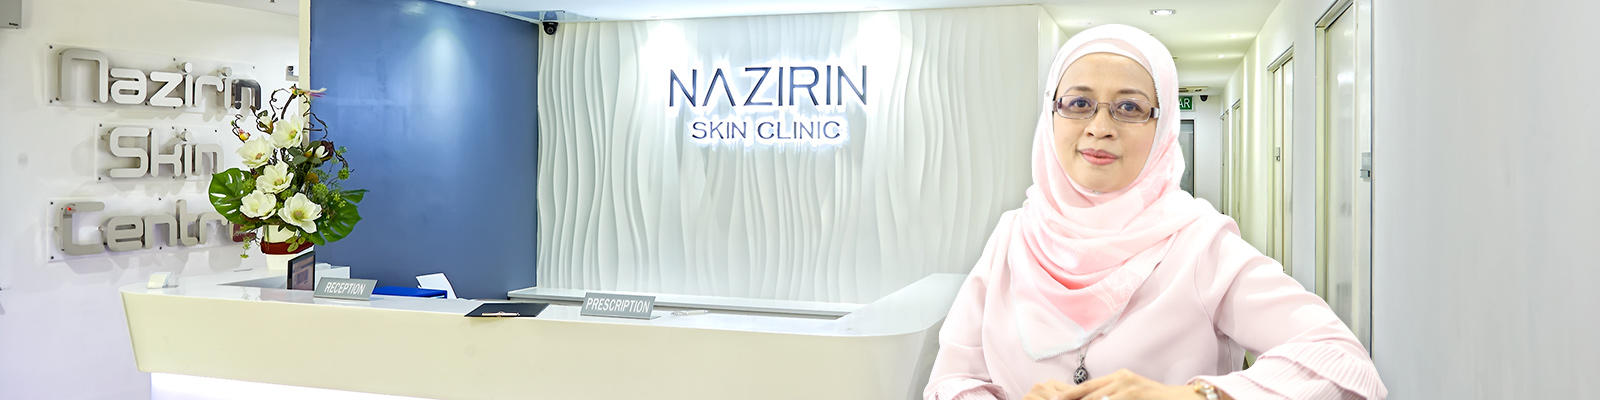 About Nazirin Skin Clinic